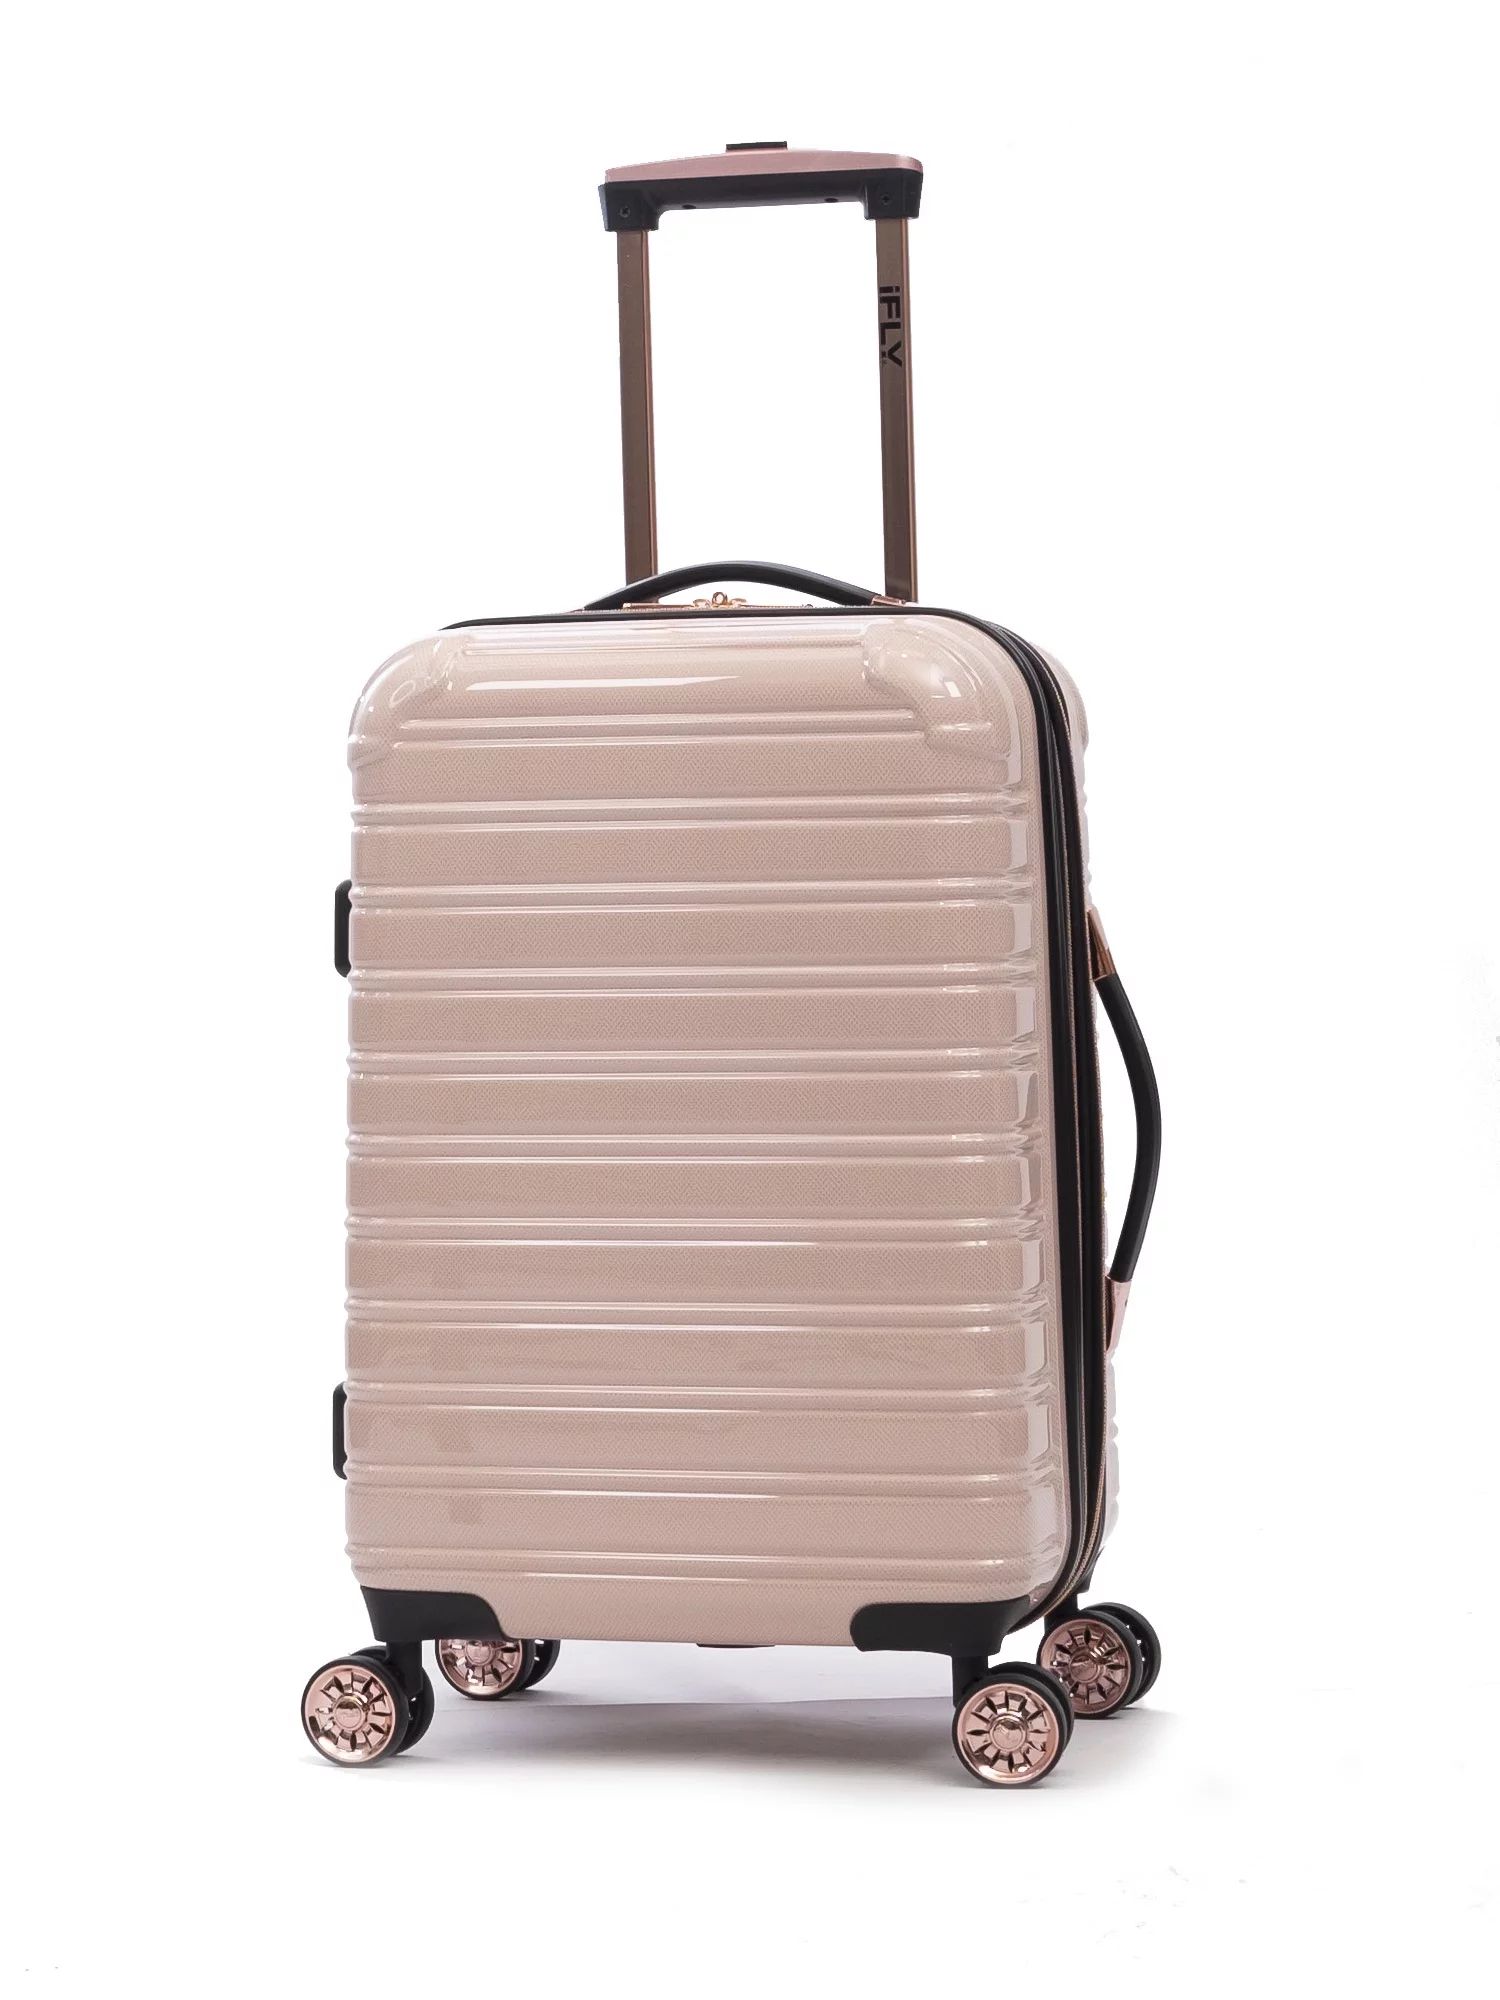 iFLY Hardside Luggage Fibertech 20 Inch Carry-on, Blush/Rose Gold | Walmart (US)